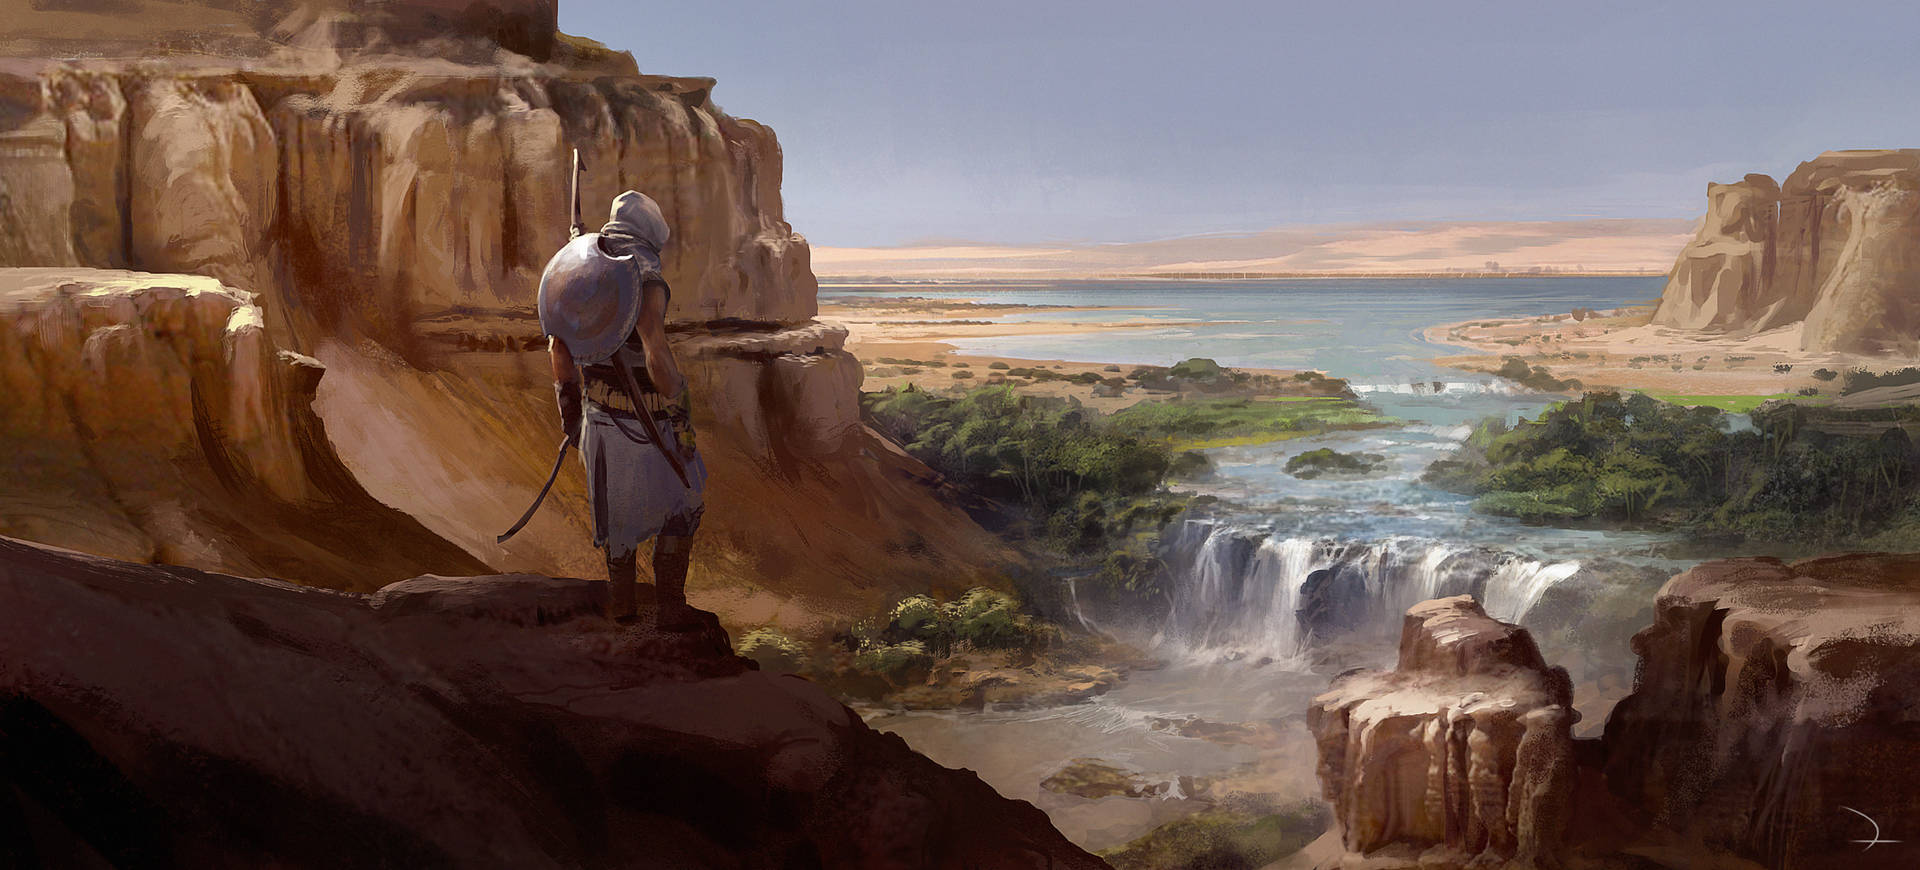 Assassin's Creed Origins Bayek Overlooking Waterfalls Wallpaper